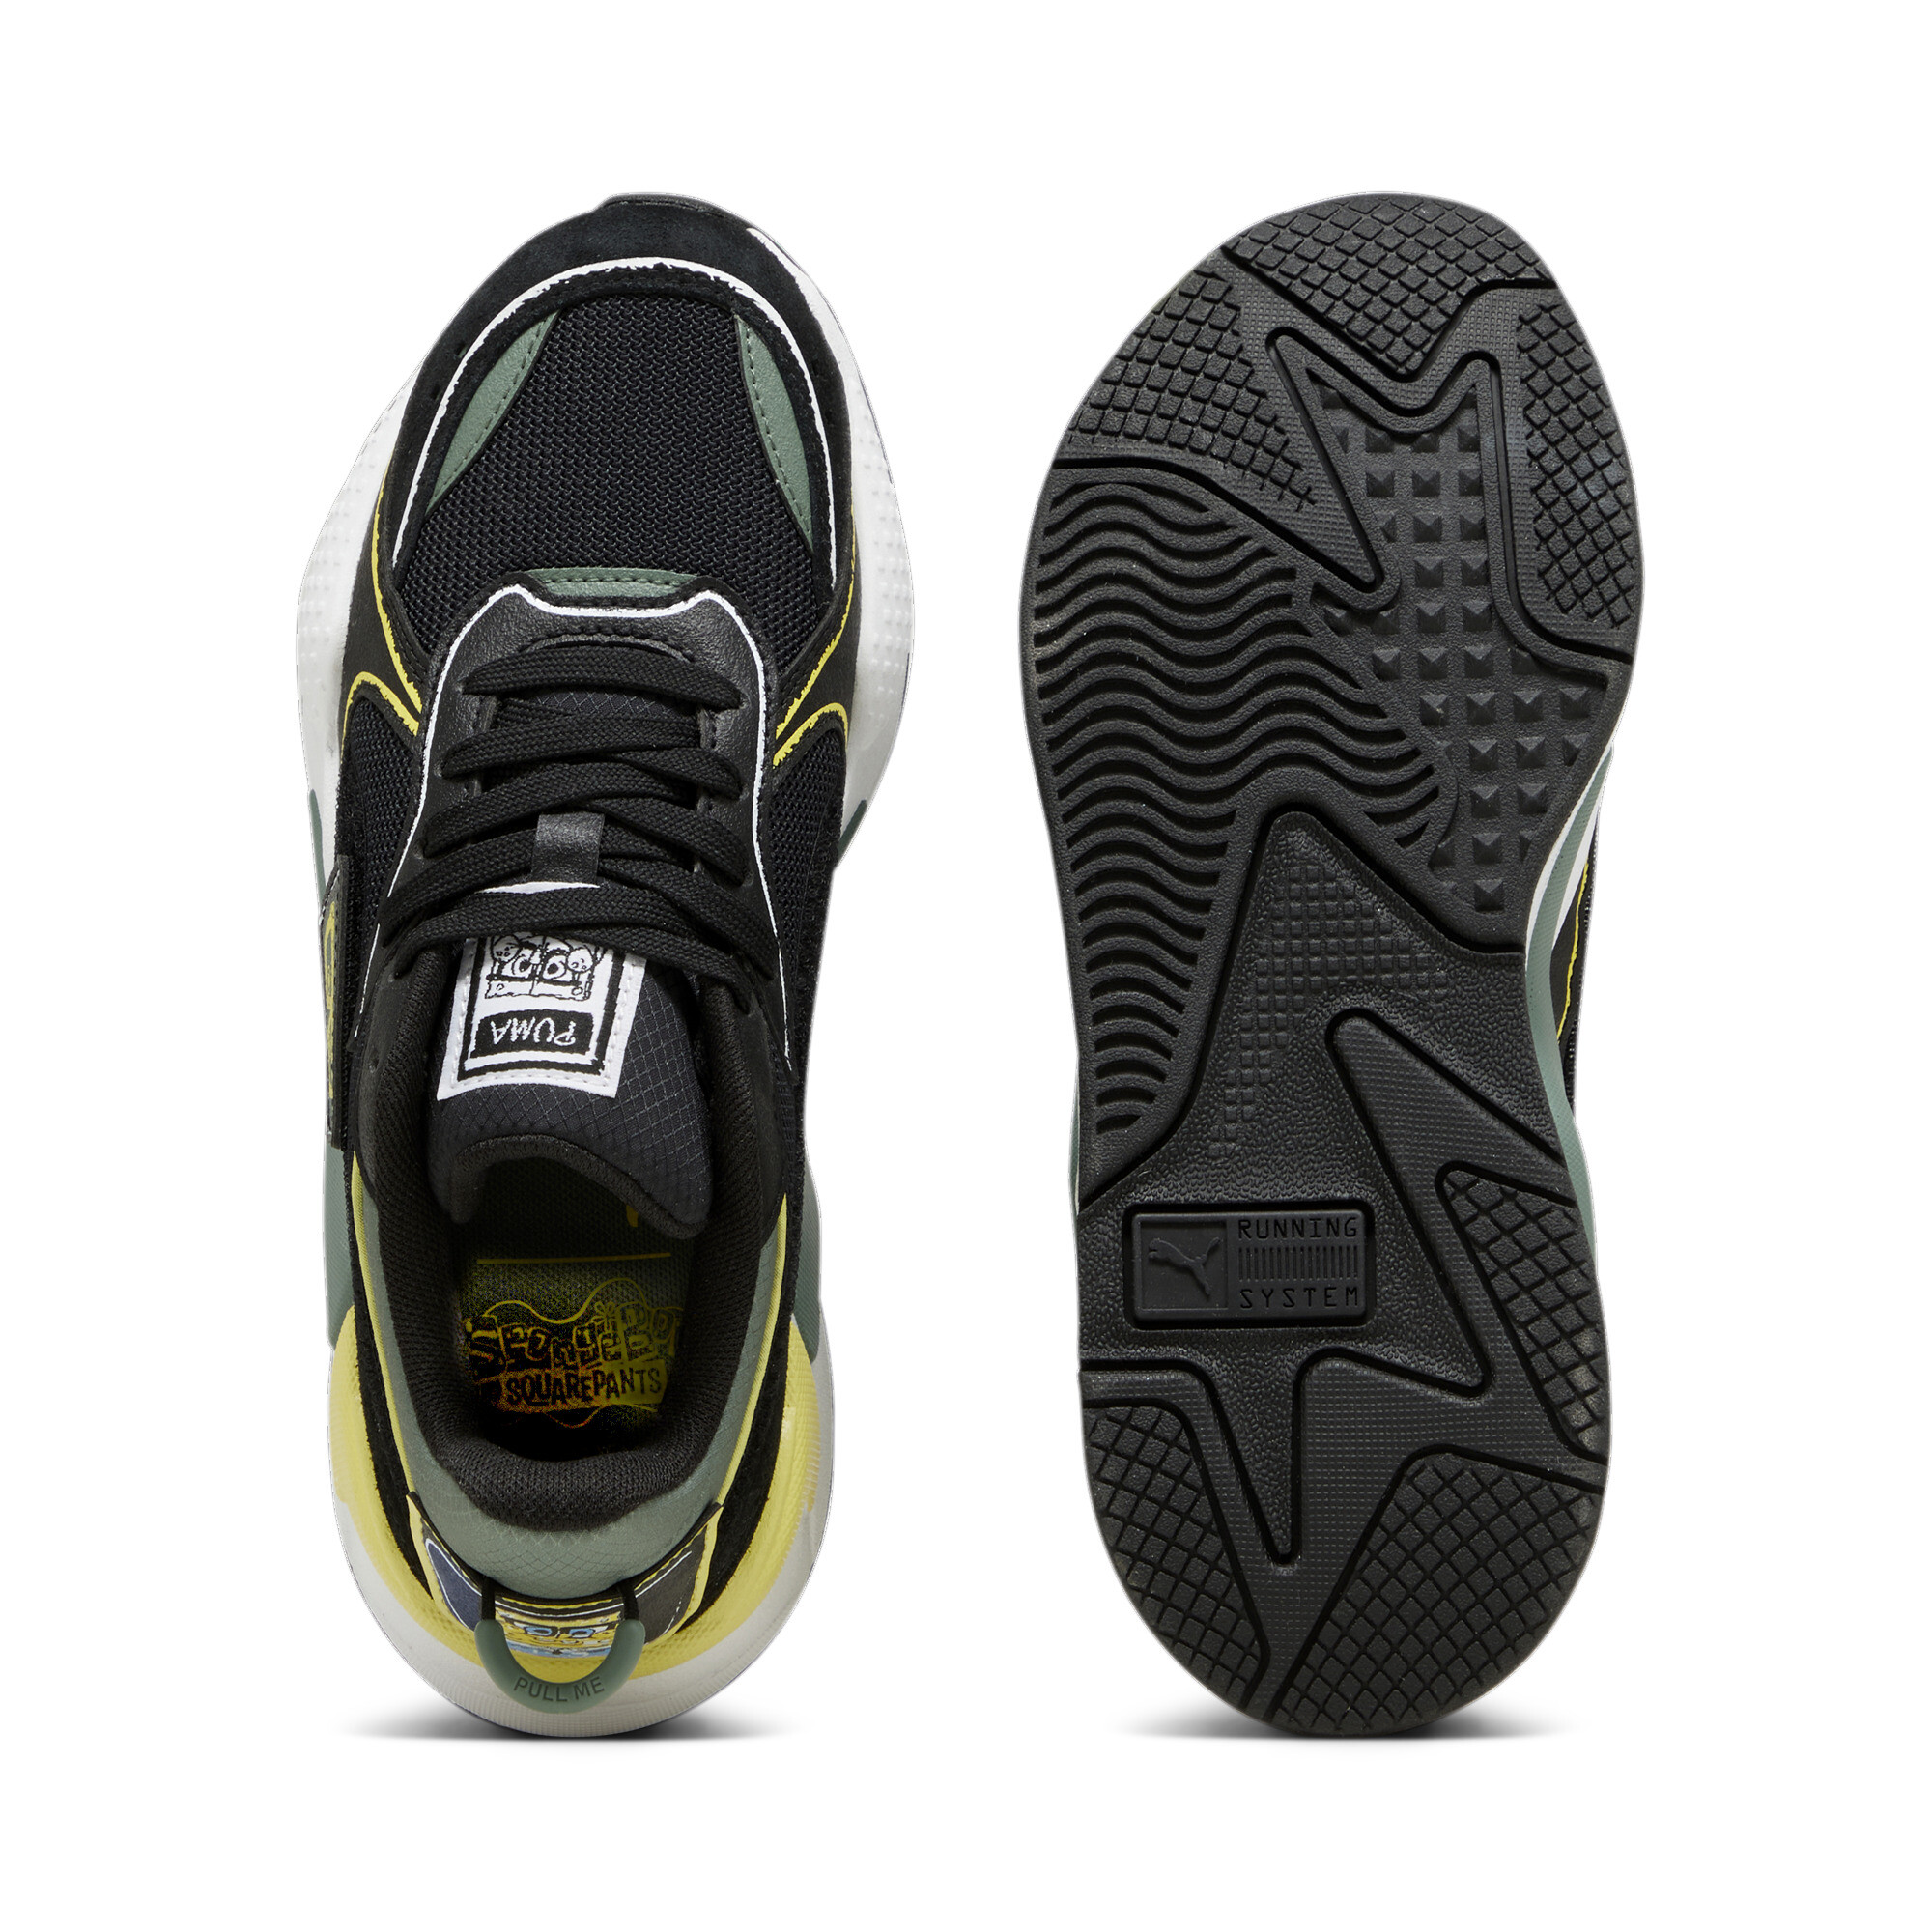 PUMA X SPONGEBOB SQUAREPANTS RS-X Youth Sneakers In Black, Size EU 39